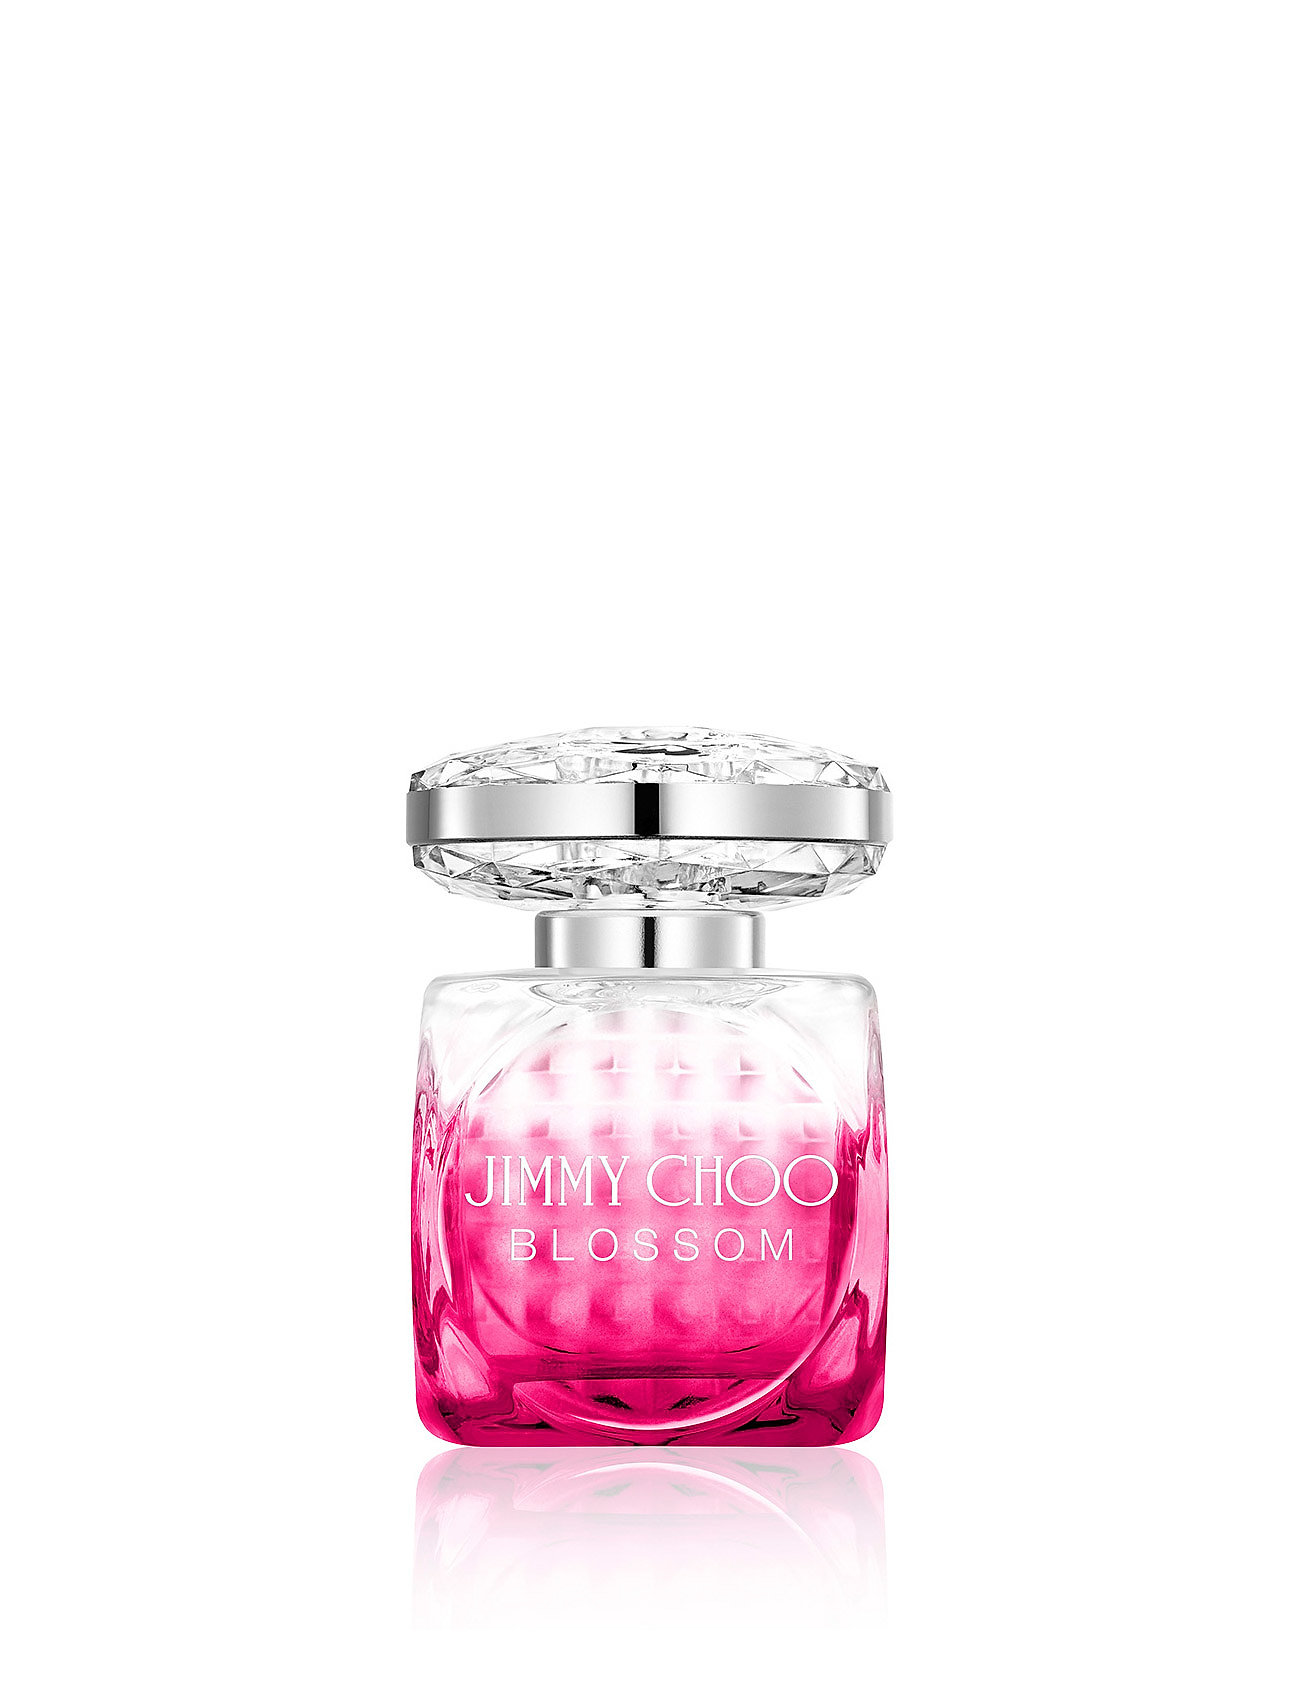 Jimmy Choo Blossom Eau De Parfum - 650 kr | Boozt.com